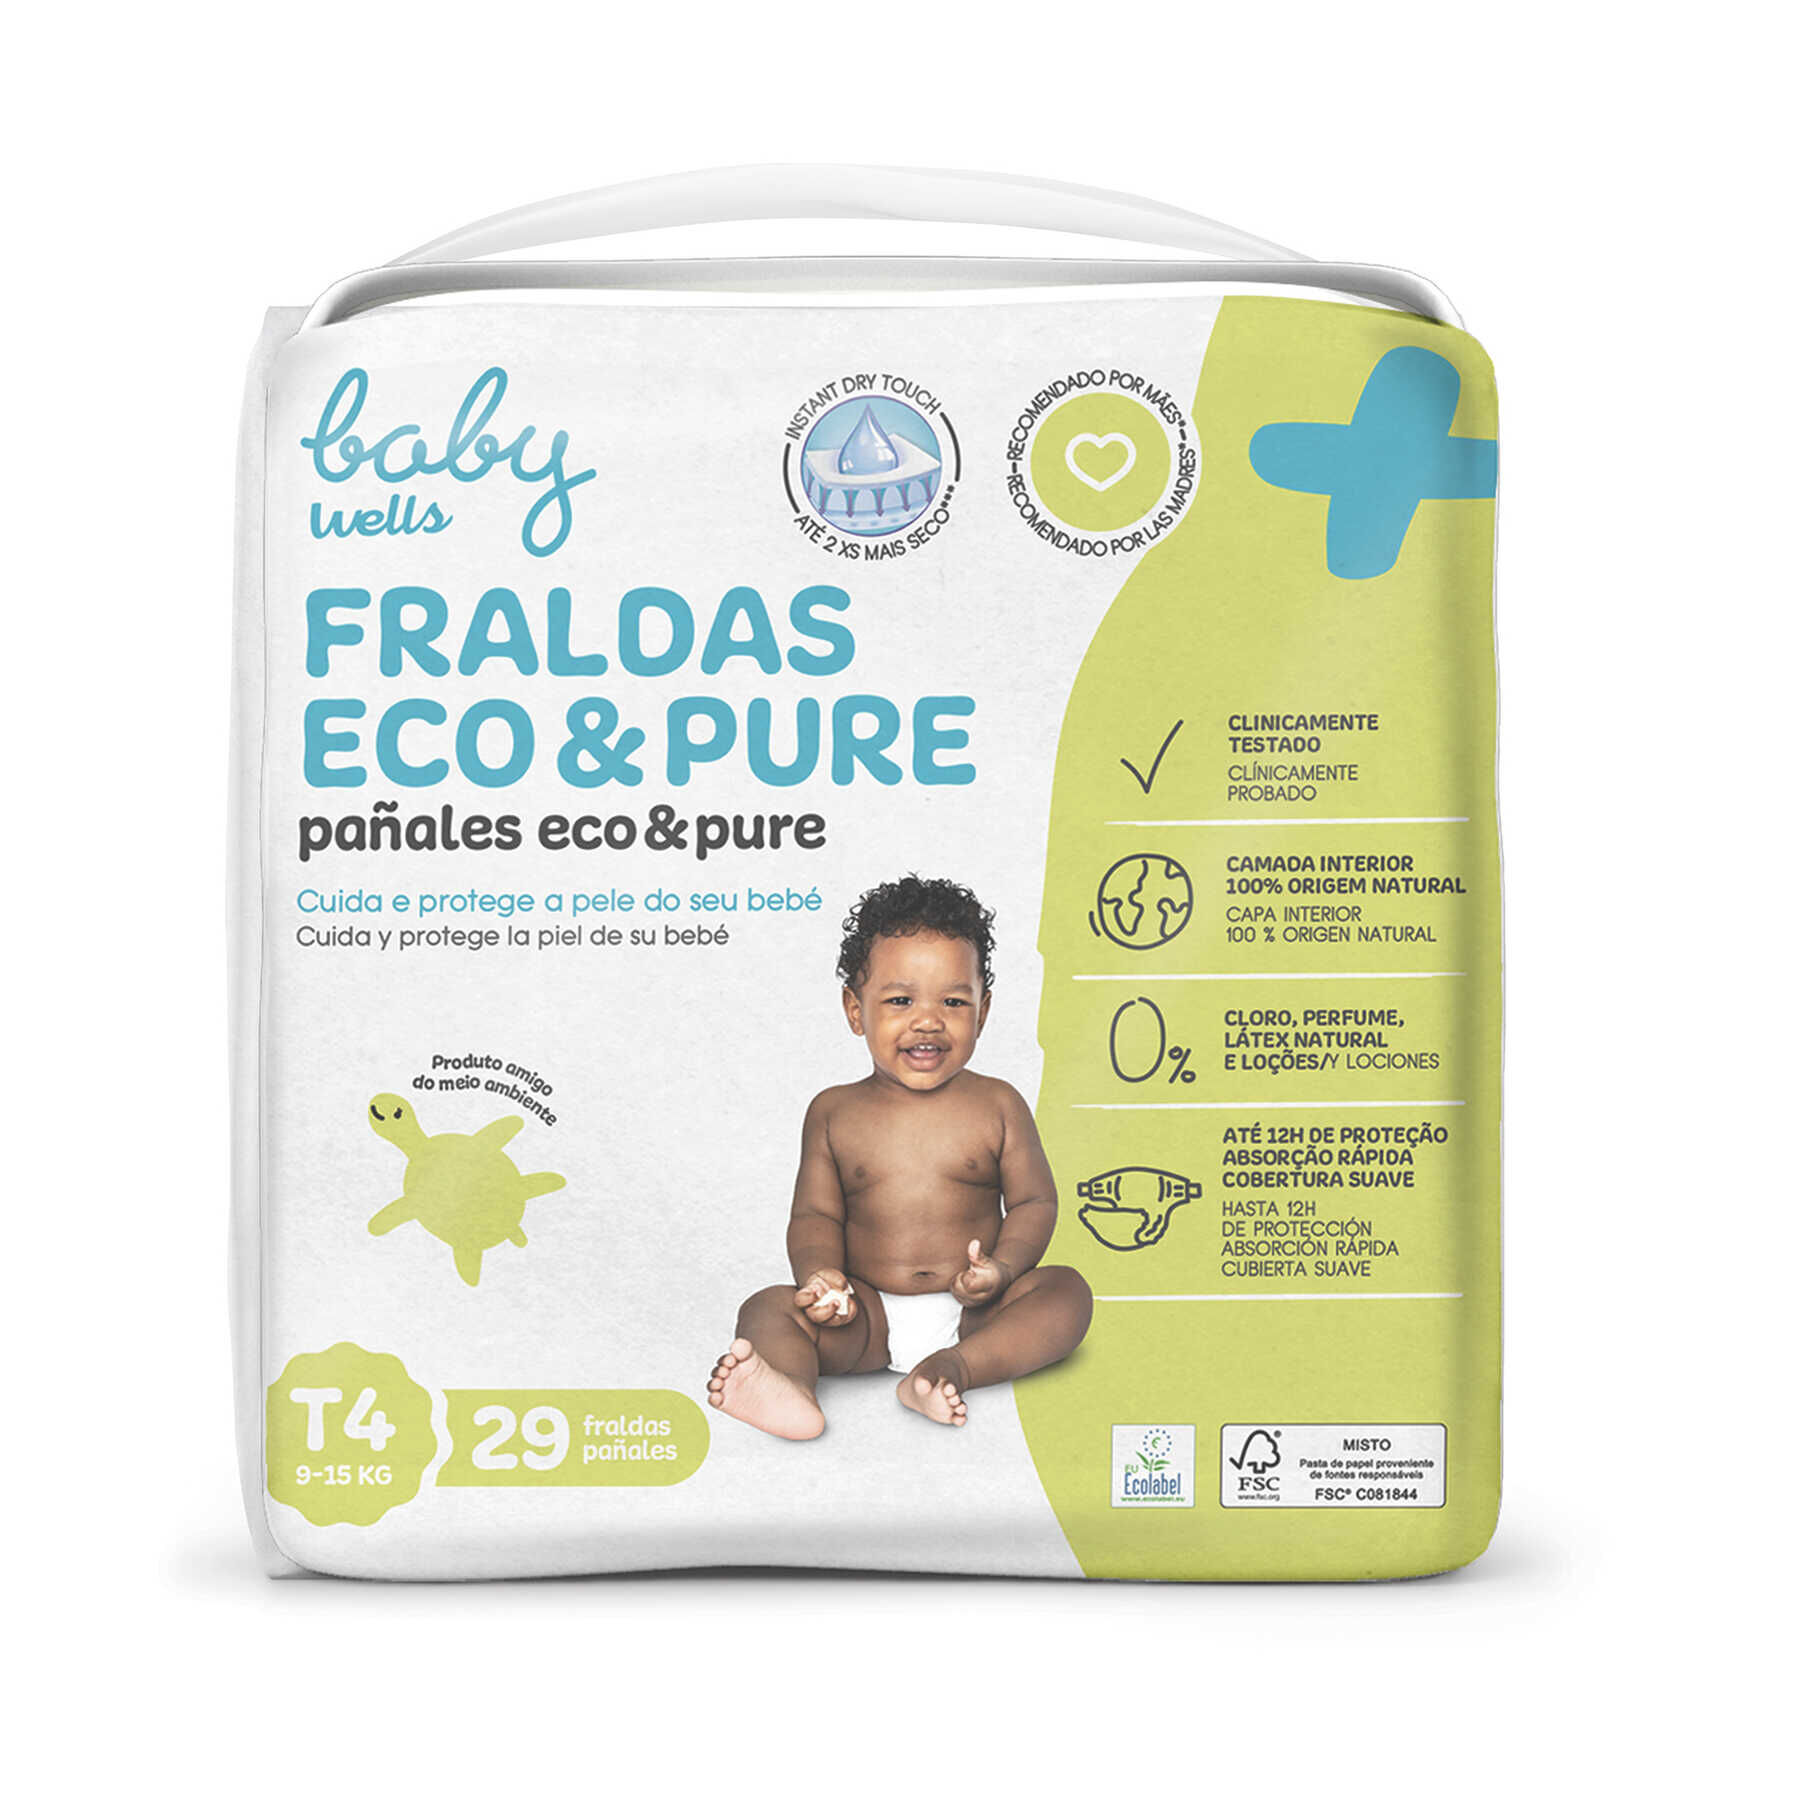 Fraldas Eco & Pure T4 Wells